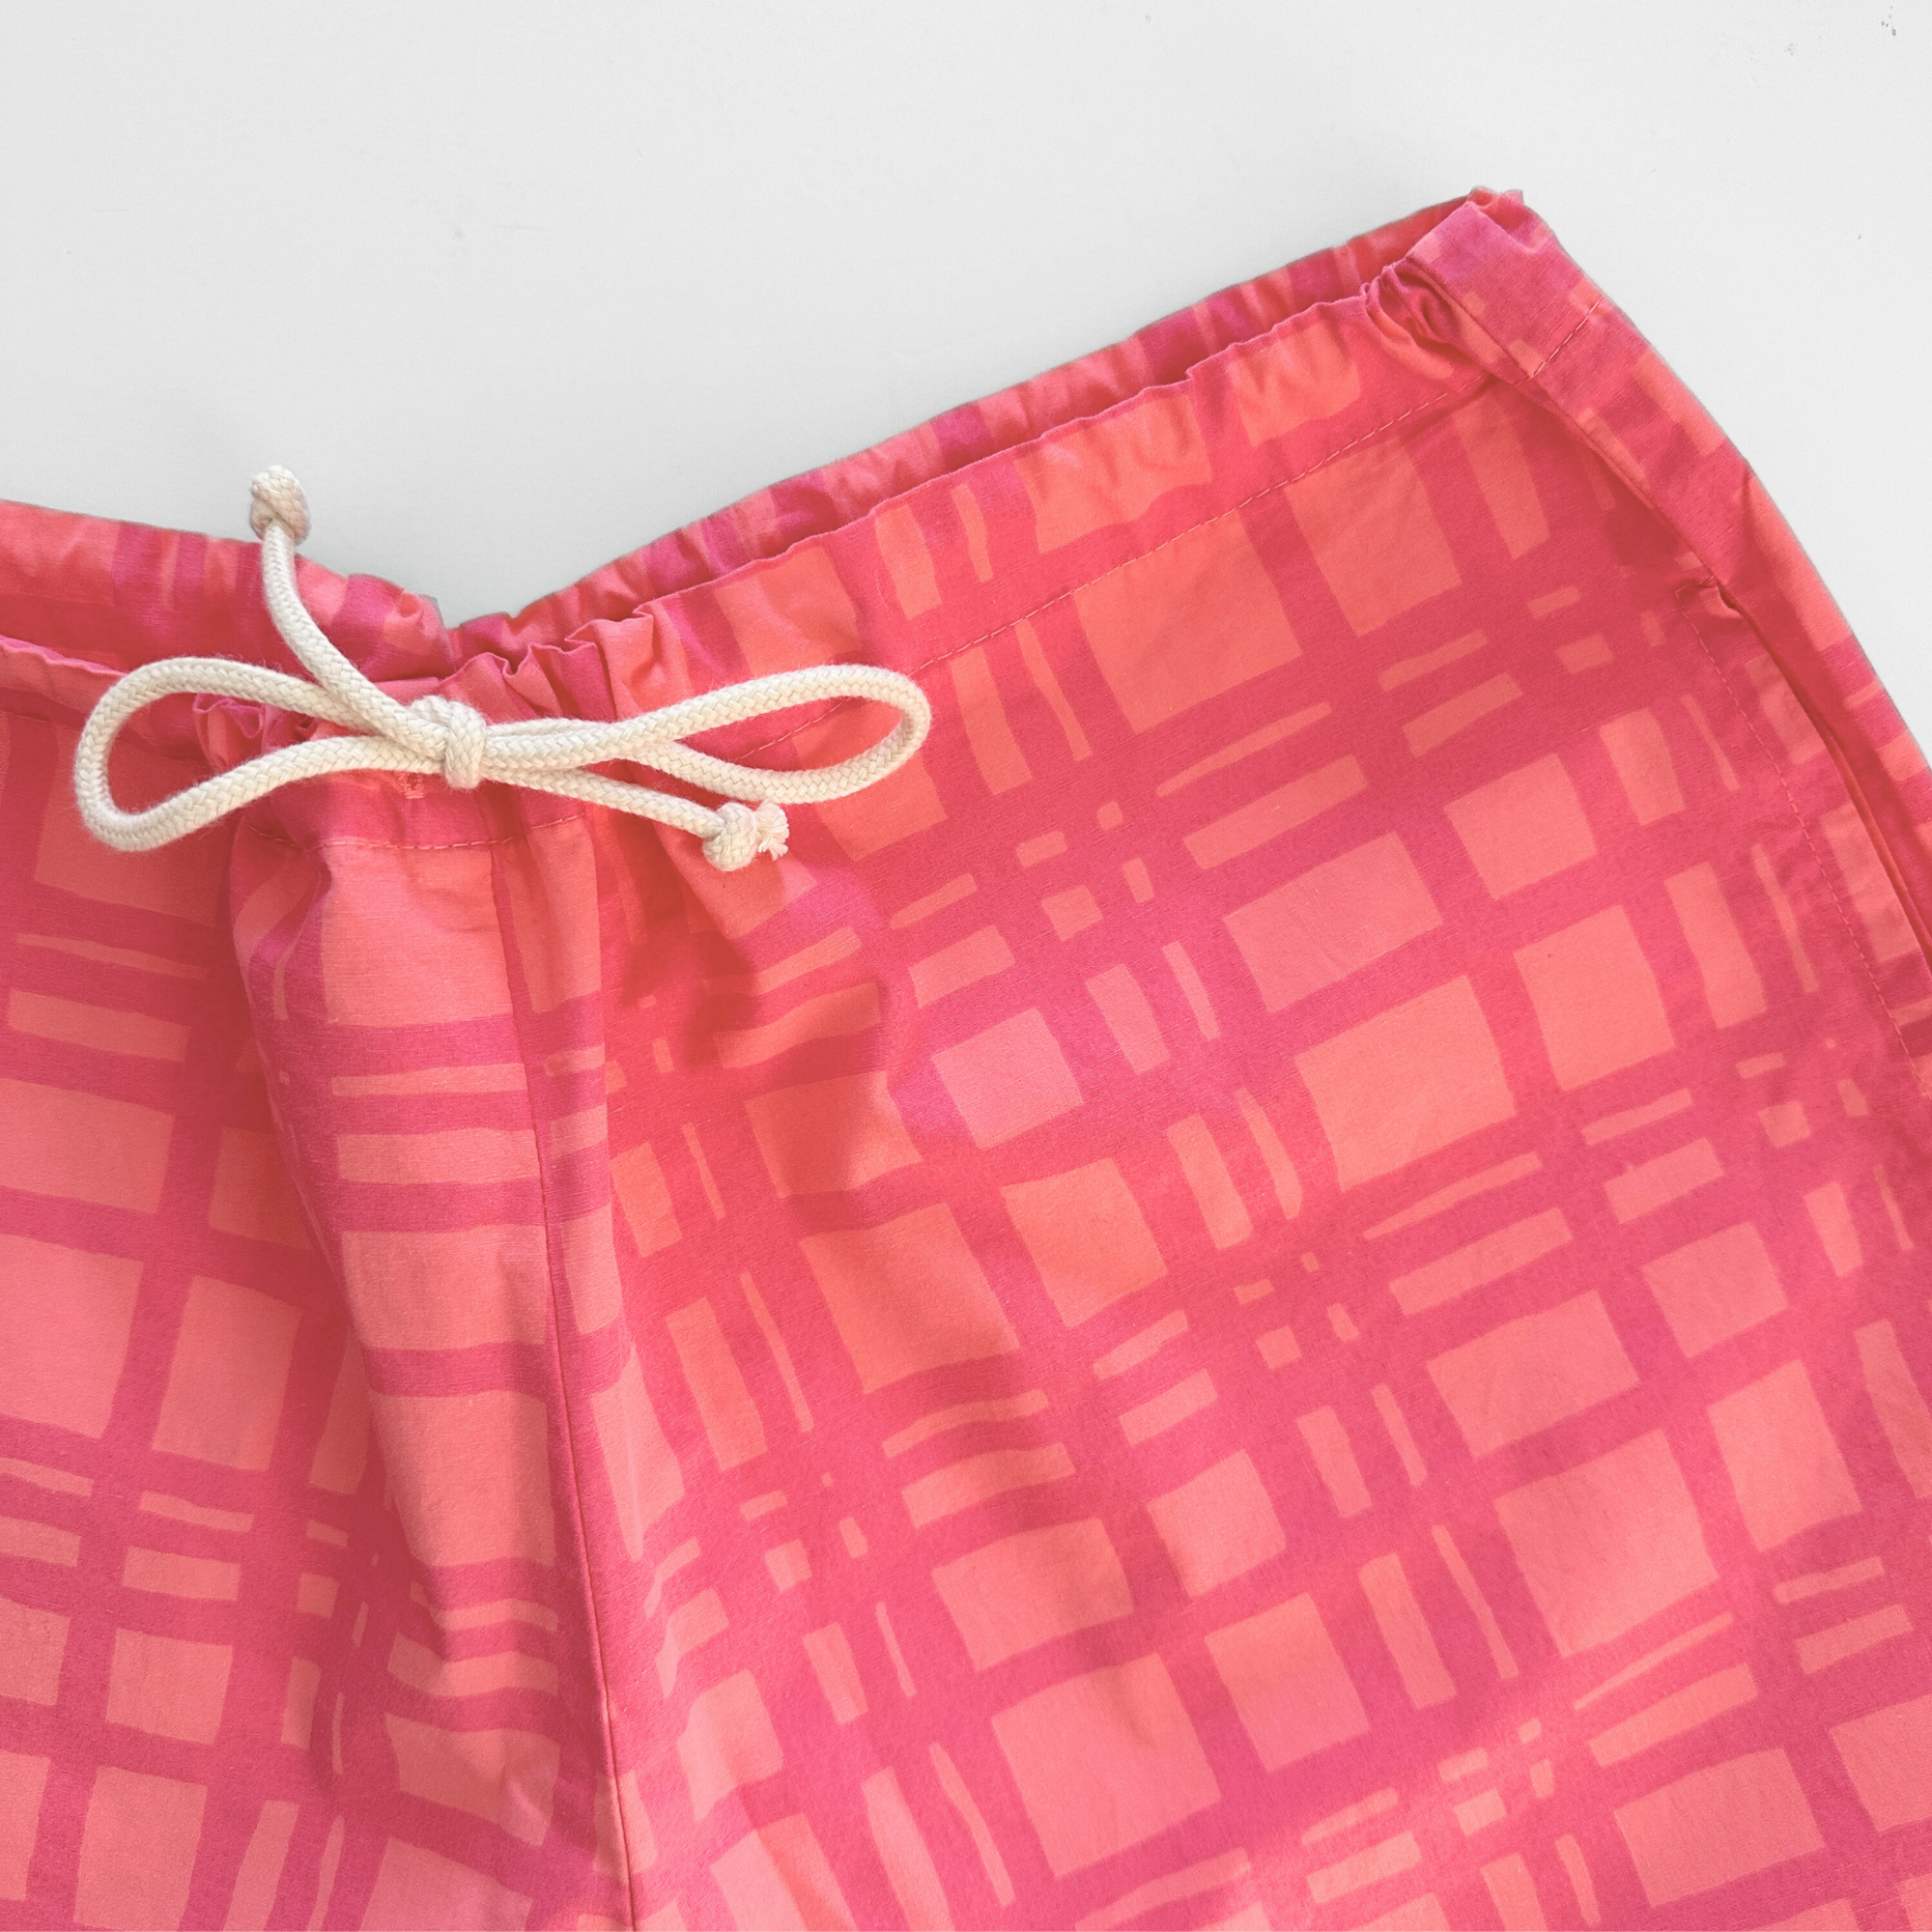 Cotton Poplin Shorts - Darby - Pink Frosting